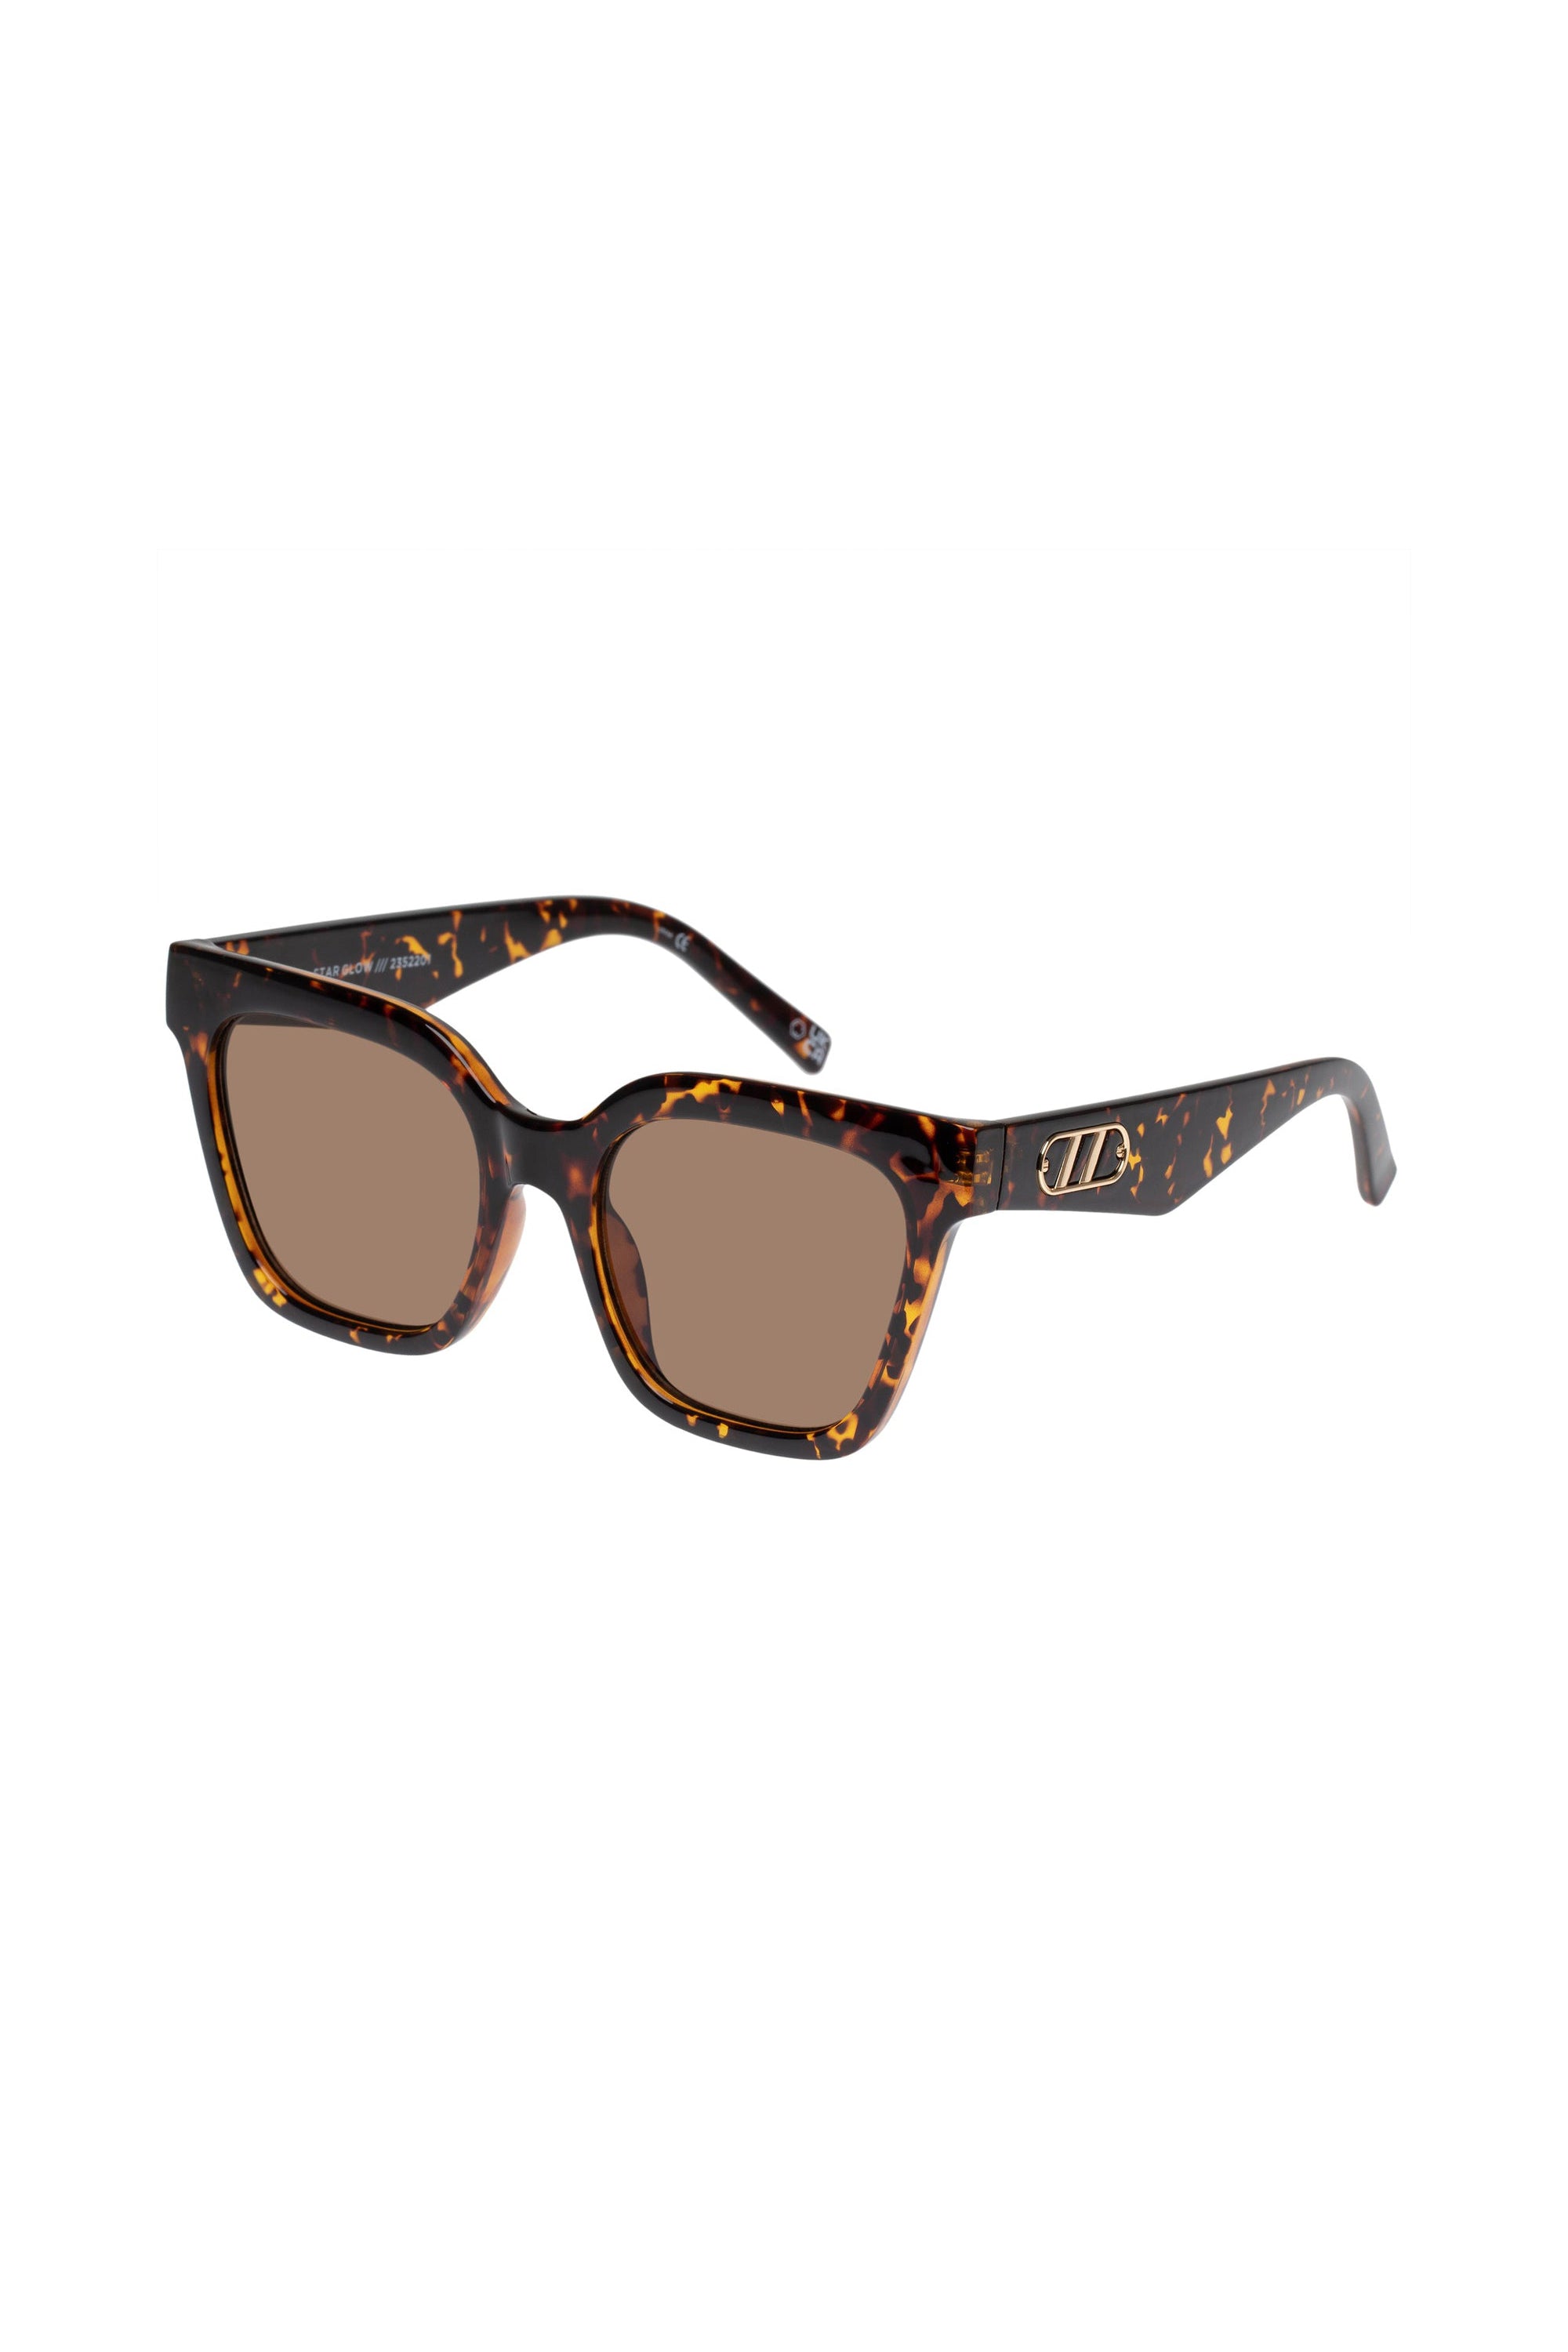 Le Specs Star Glow Sunglasses - Dark Tort - RUM Amsterdam